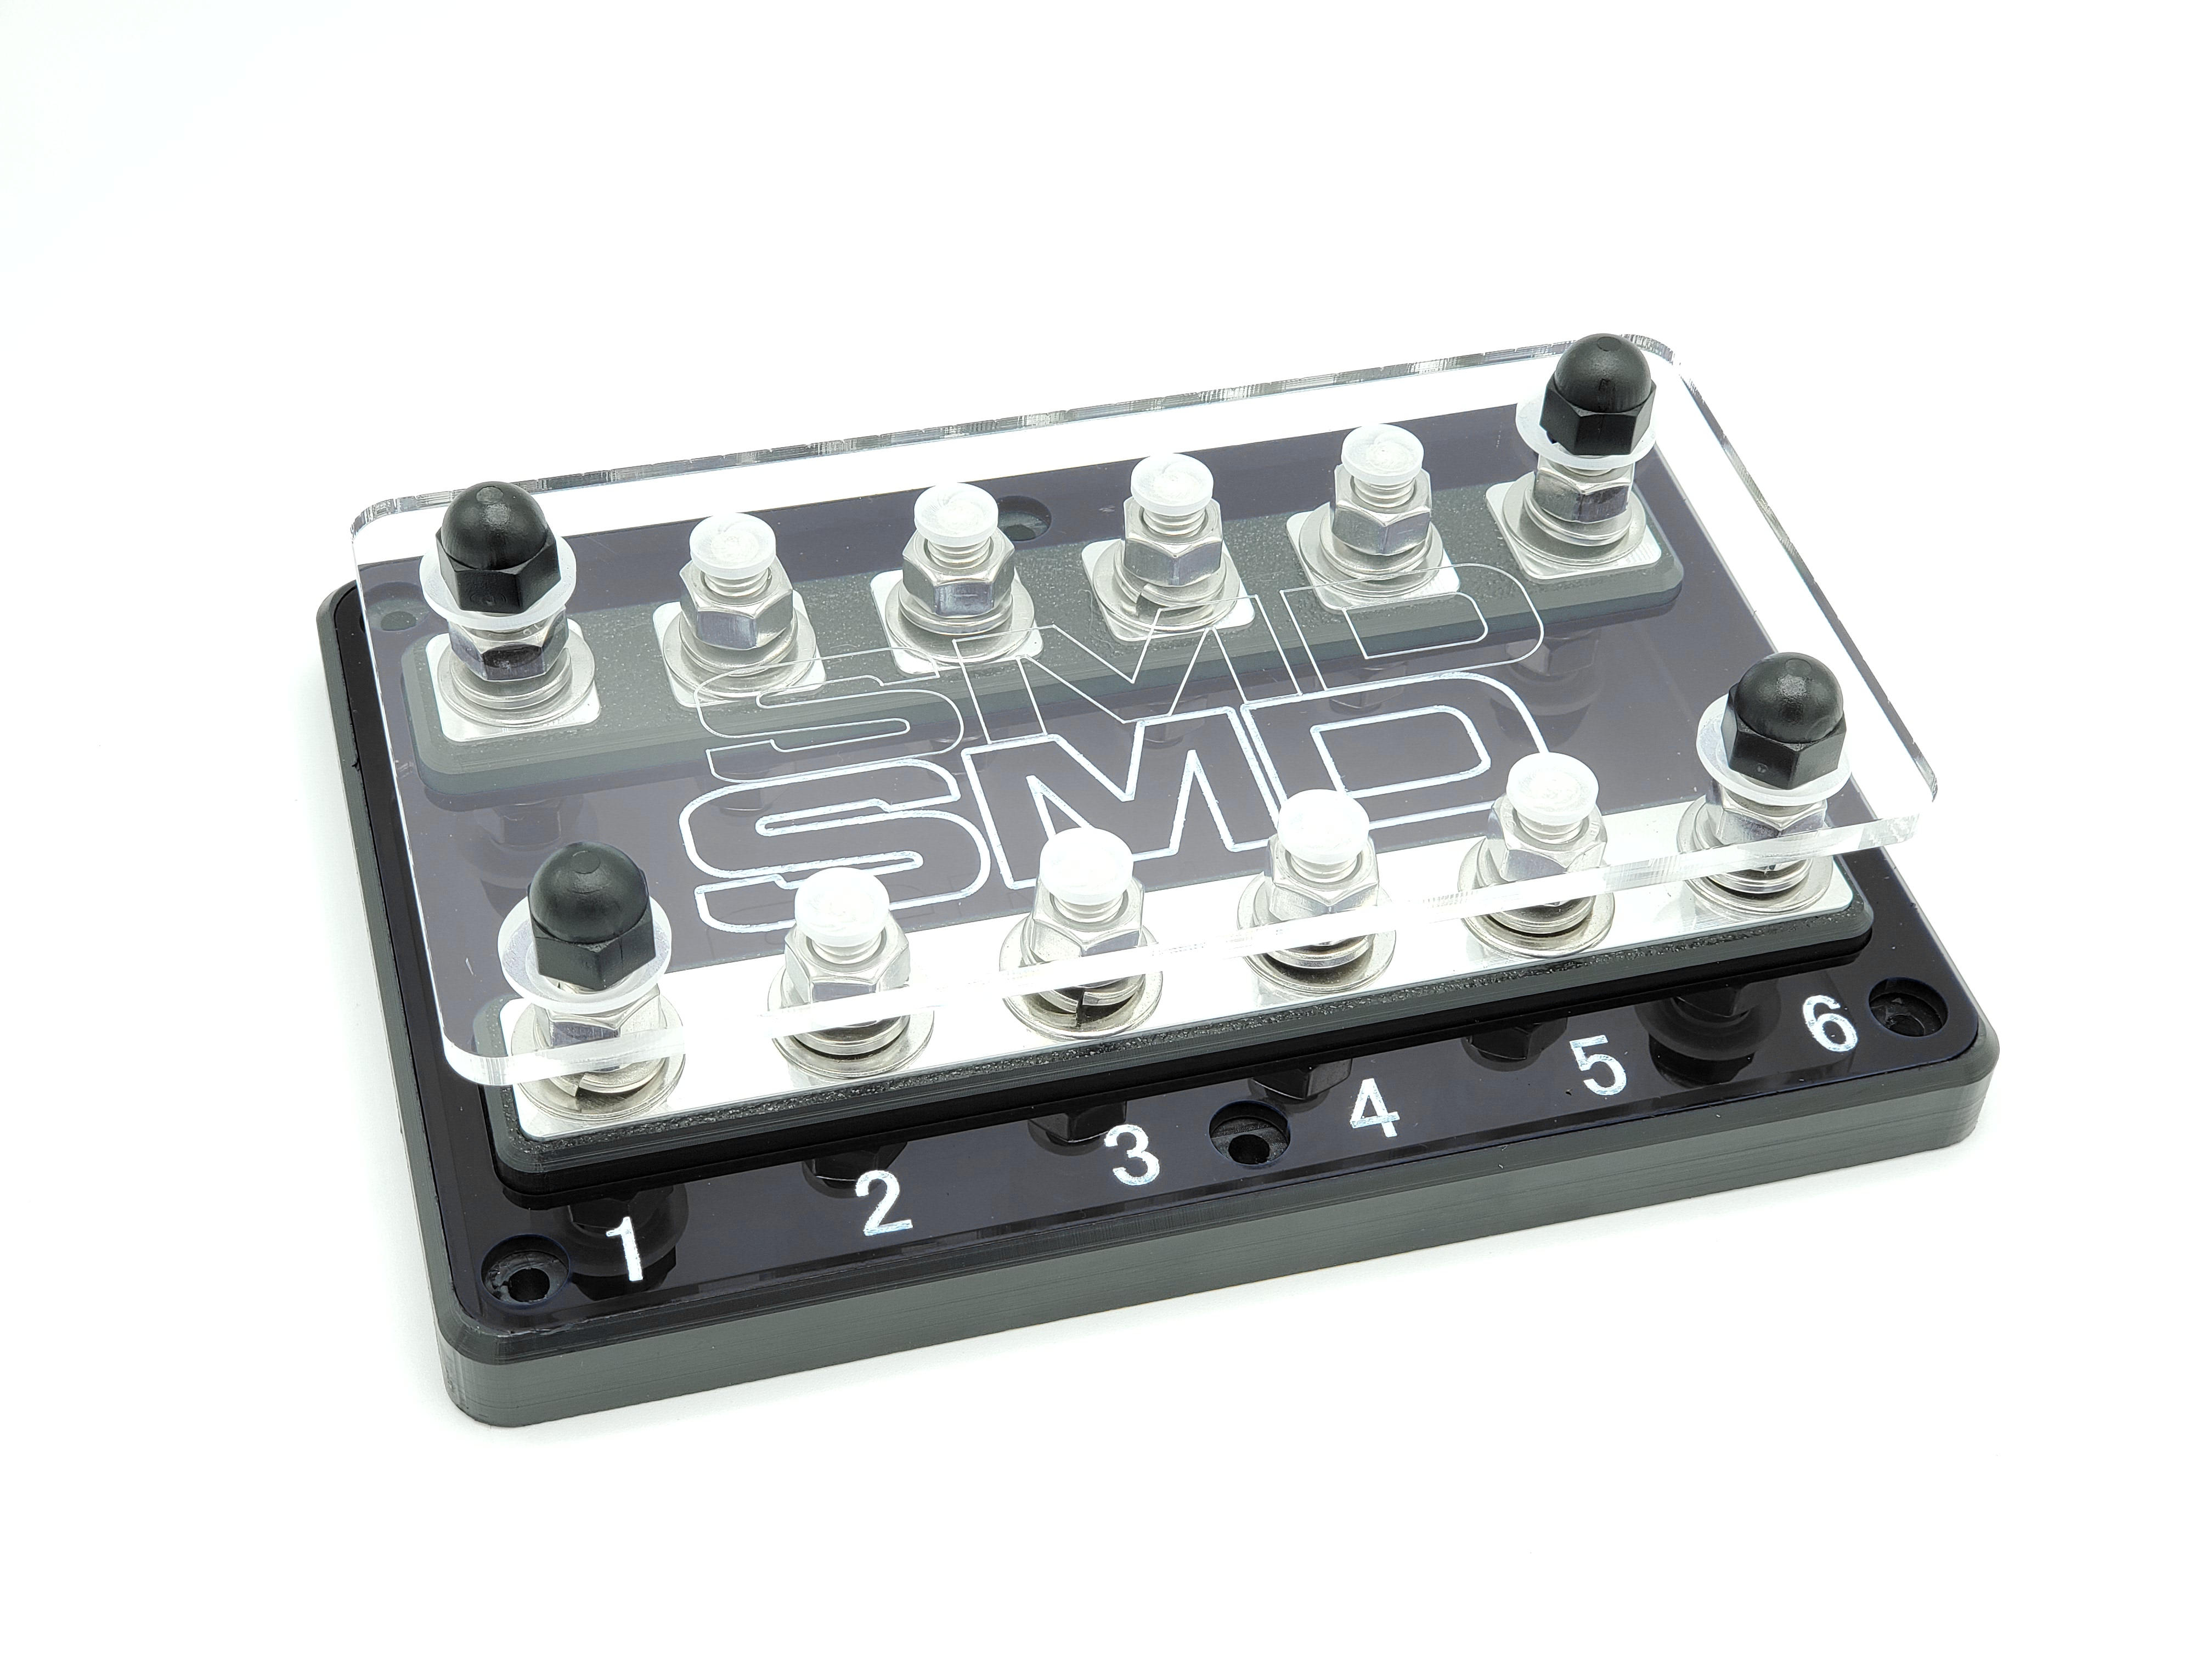 SMD Hex 6-Spot ANL Fuse Block - Steve Meade Designs